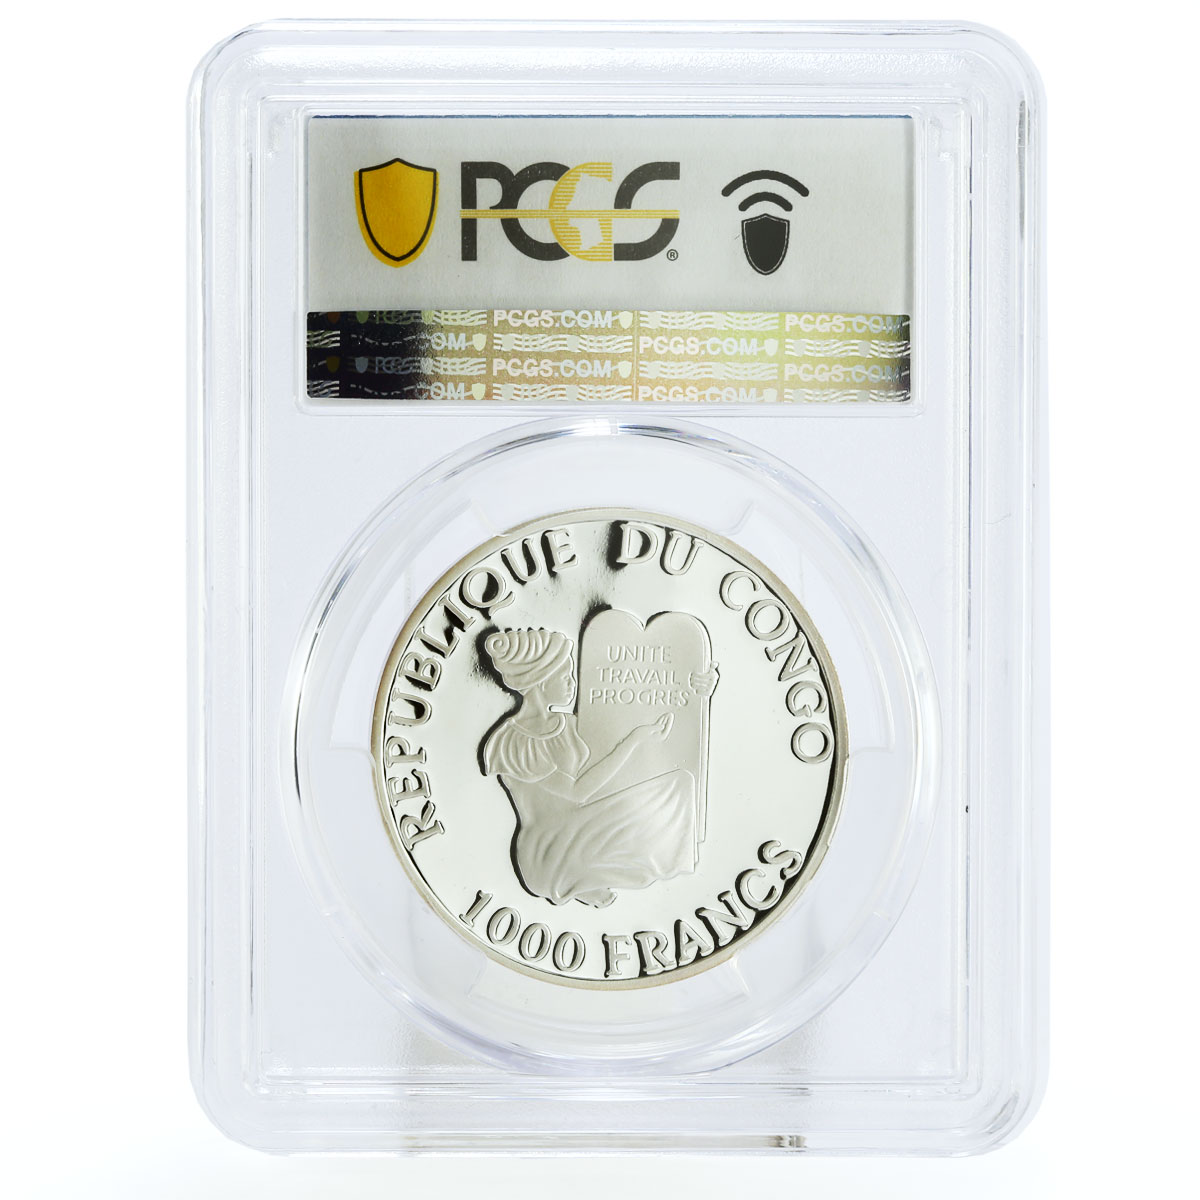 Congo 1000 francs English Naturalist Charles Darwin PR69 PCGS silver coin 1999